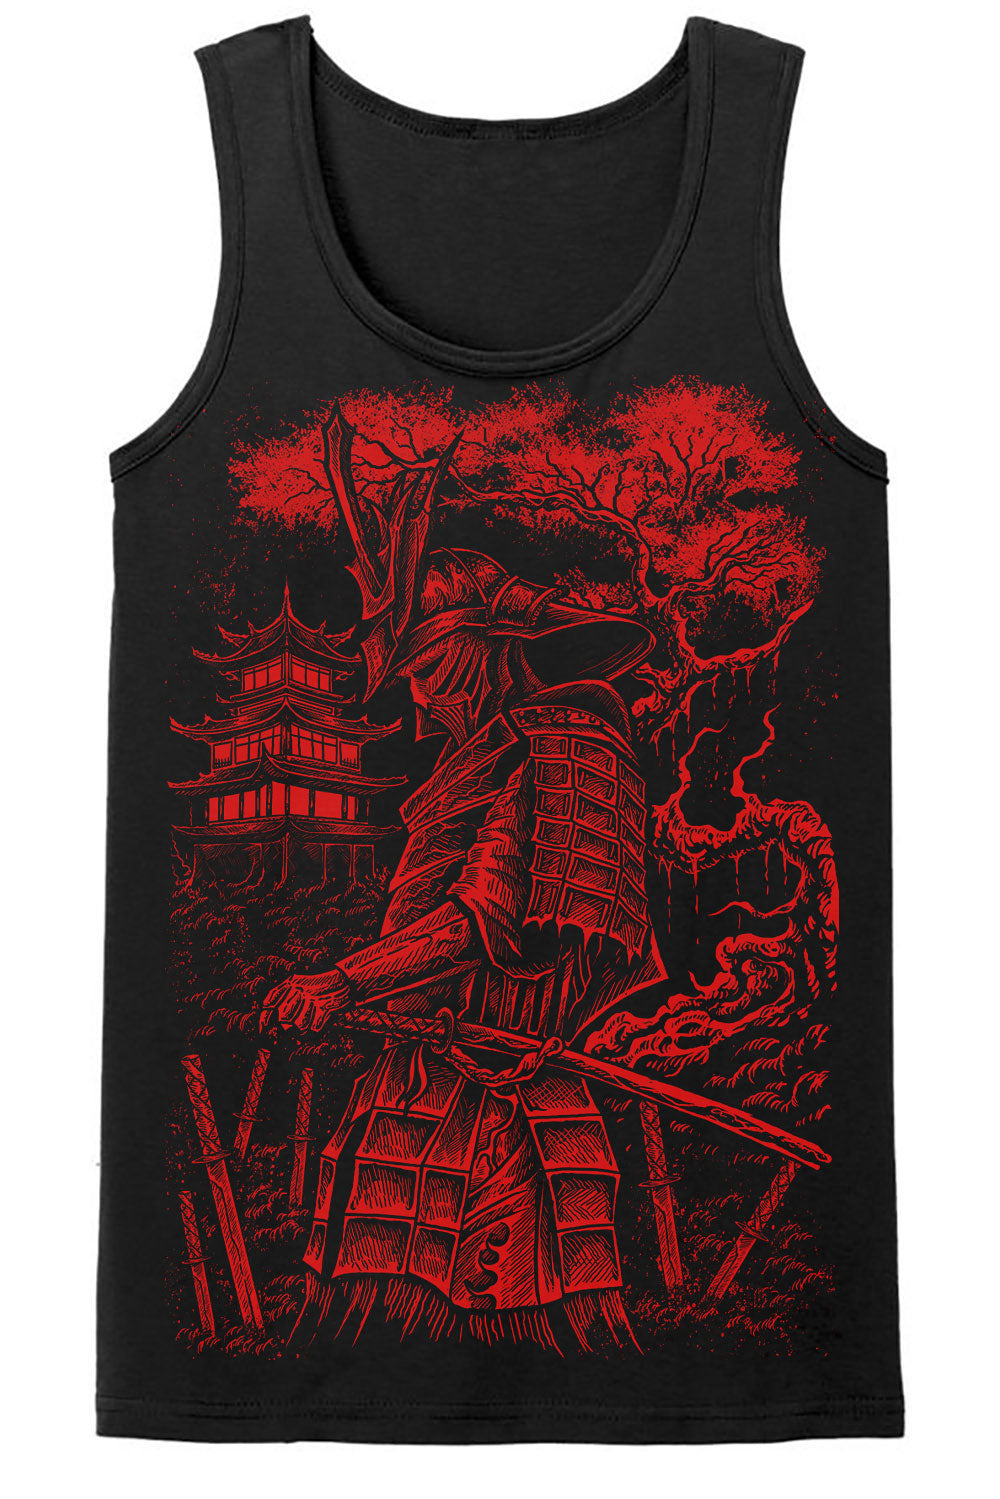 Samurai Warrior Tee [BLOOD RED]